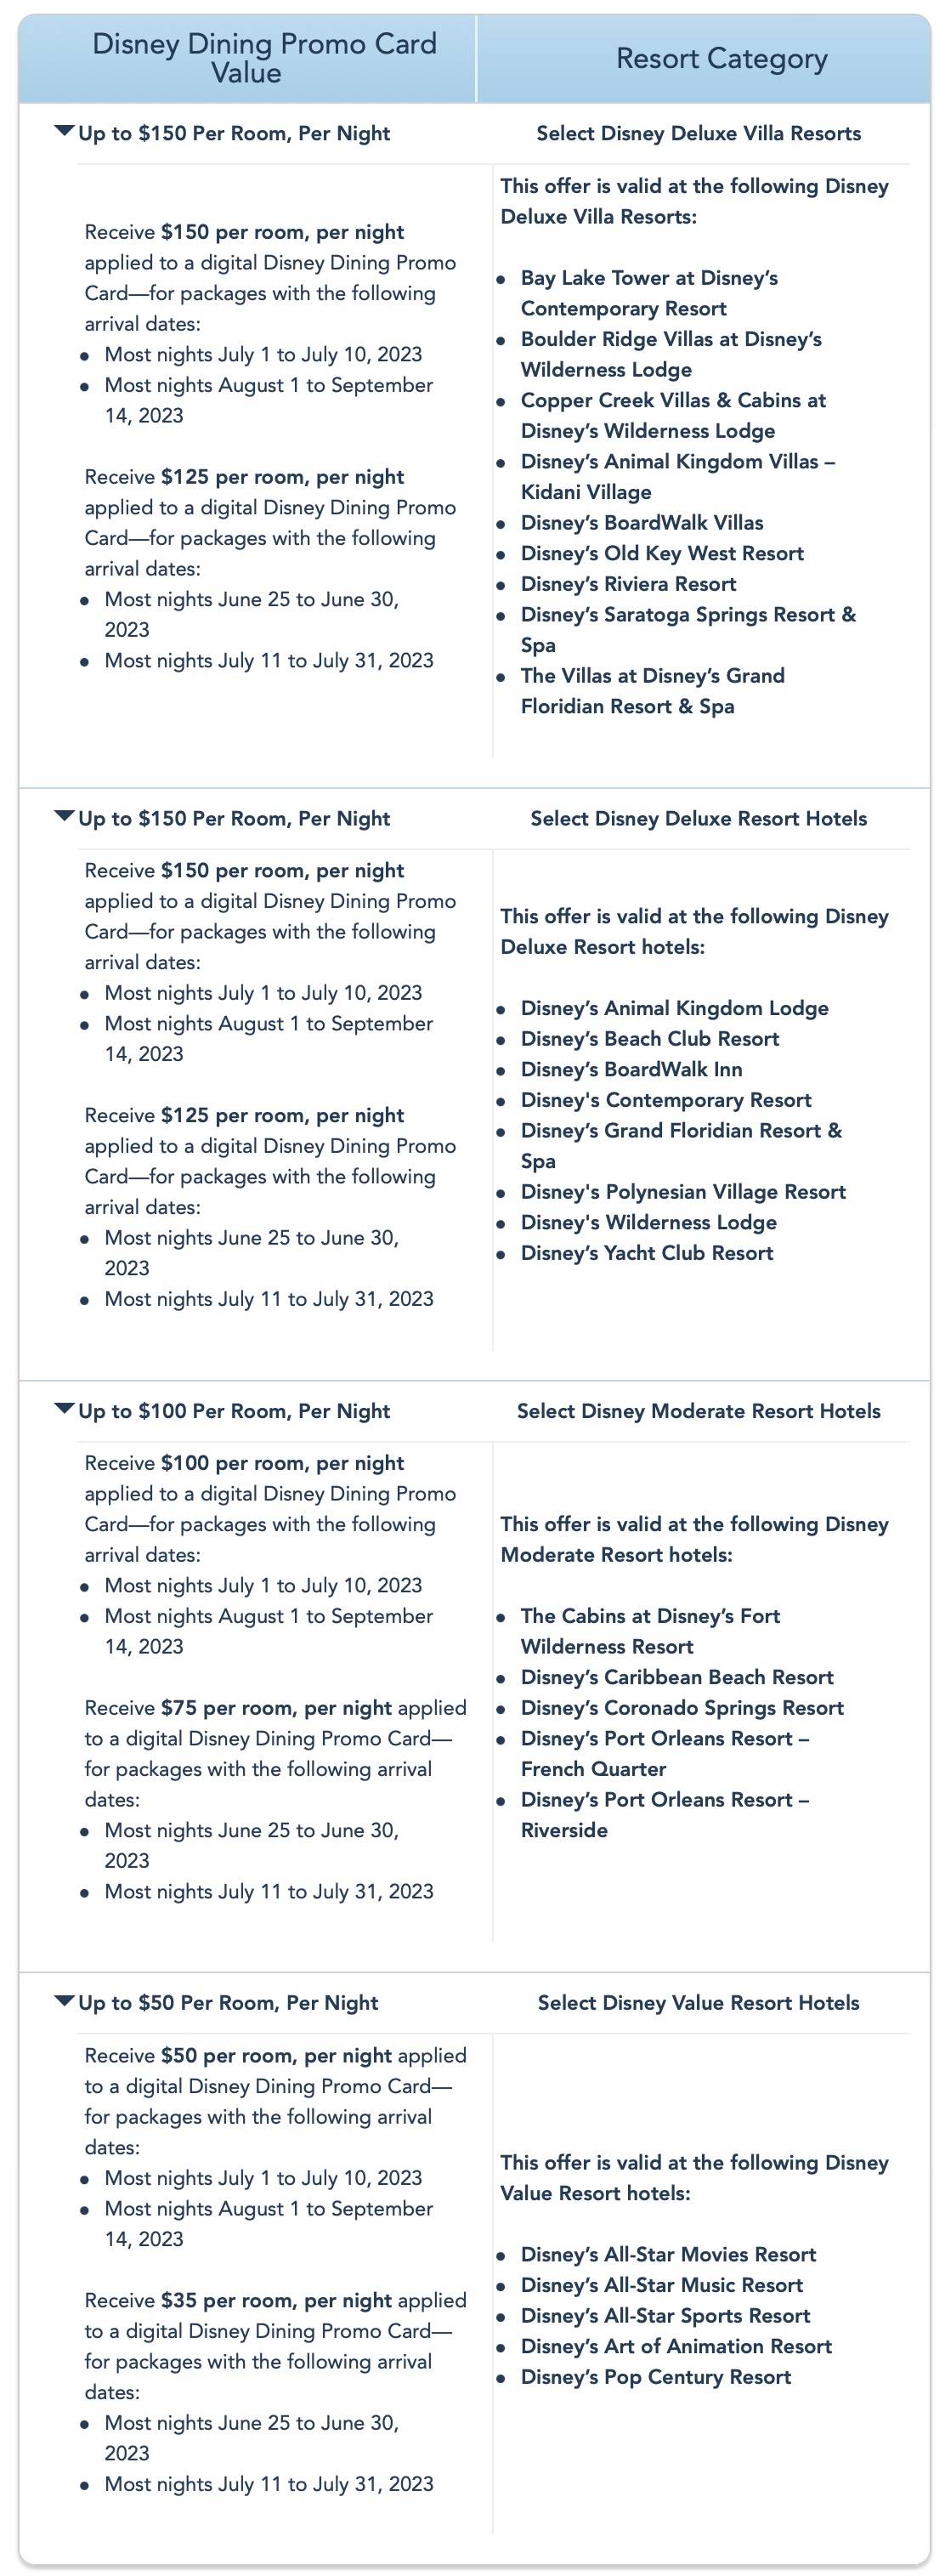 Disney Dining Promo Card resort list and value